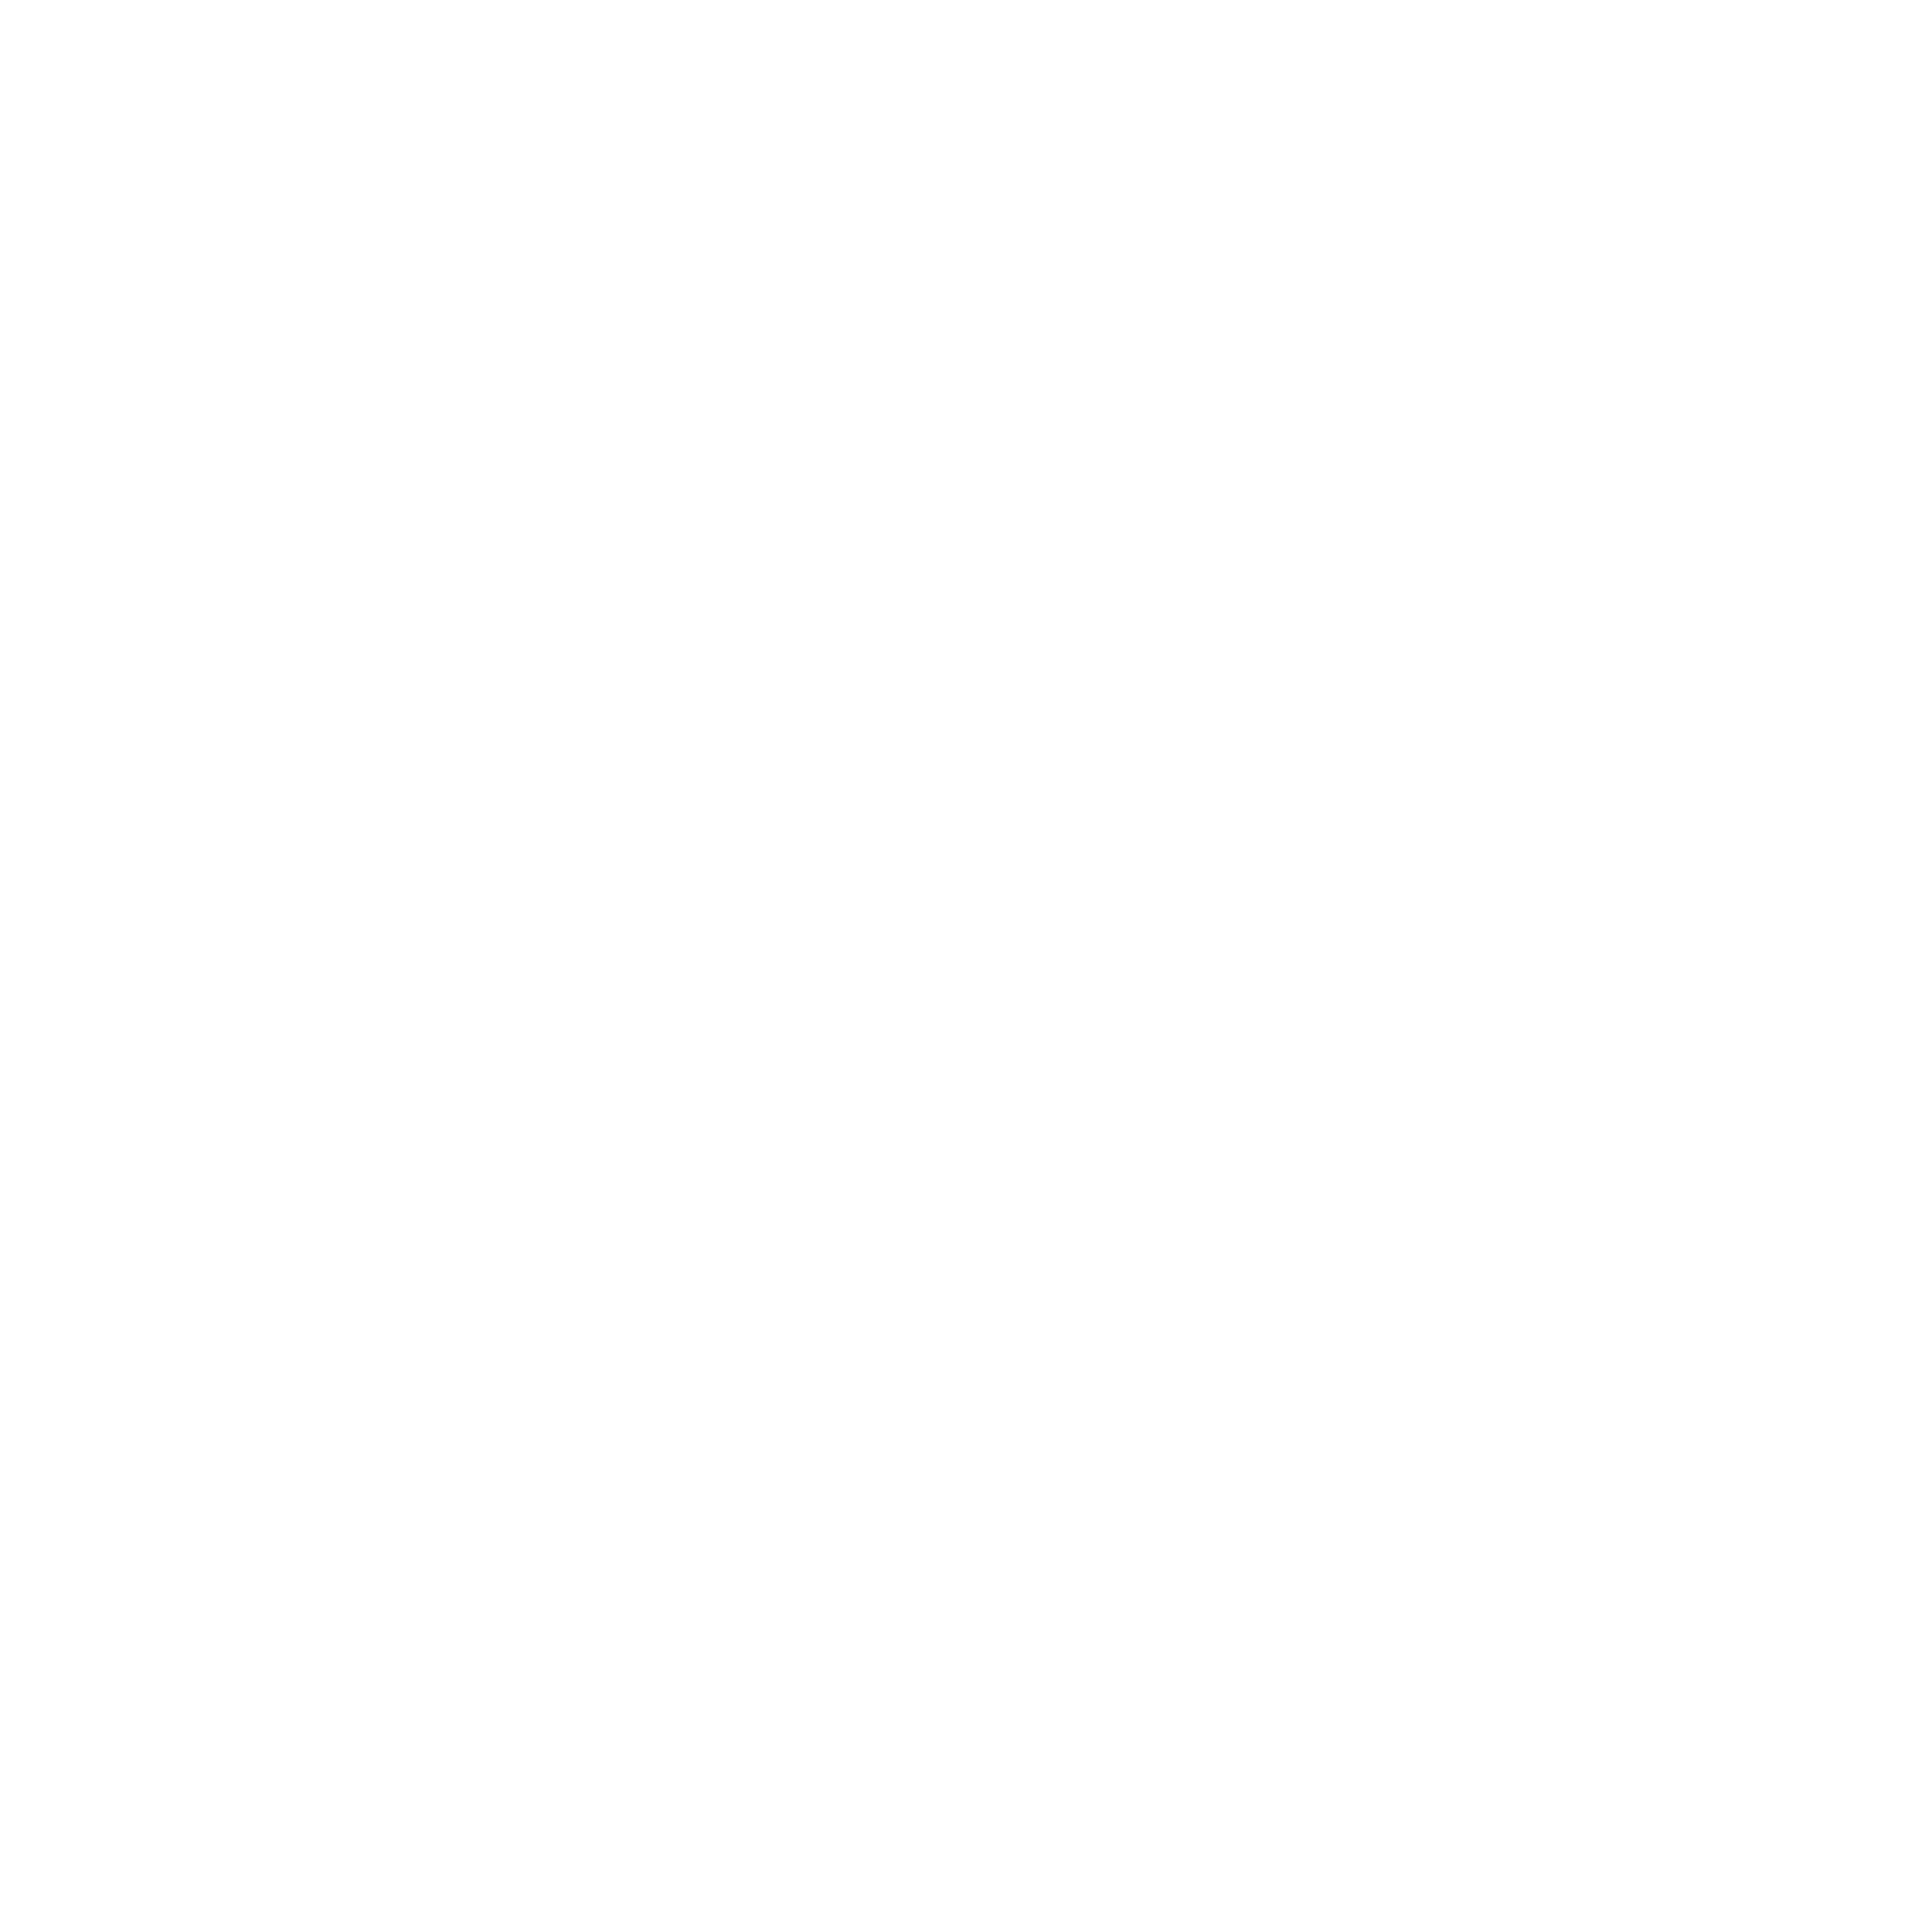 Nestle Chocolate Logo - Nestle Chocolate Logo PNG Transparent & SVG Vector - Freebie Supply